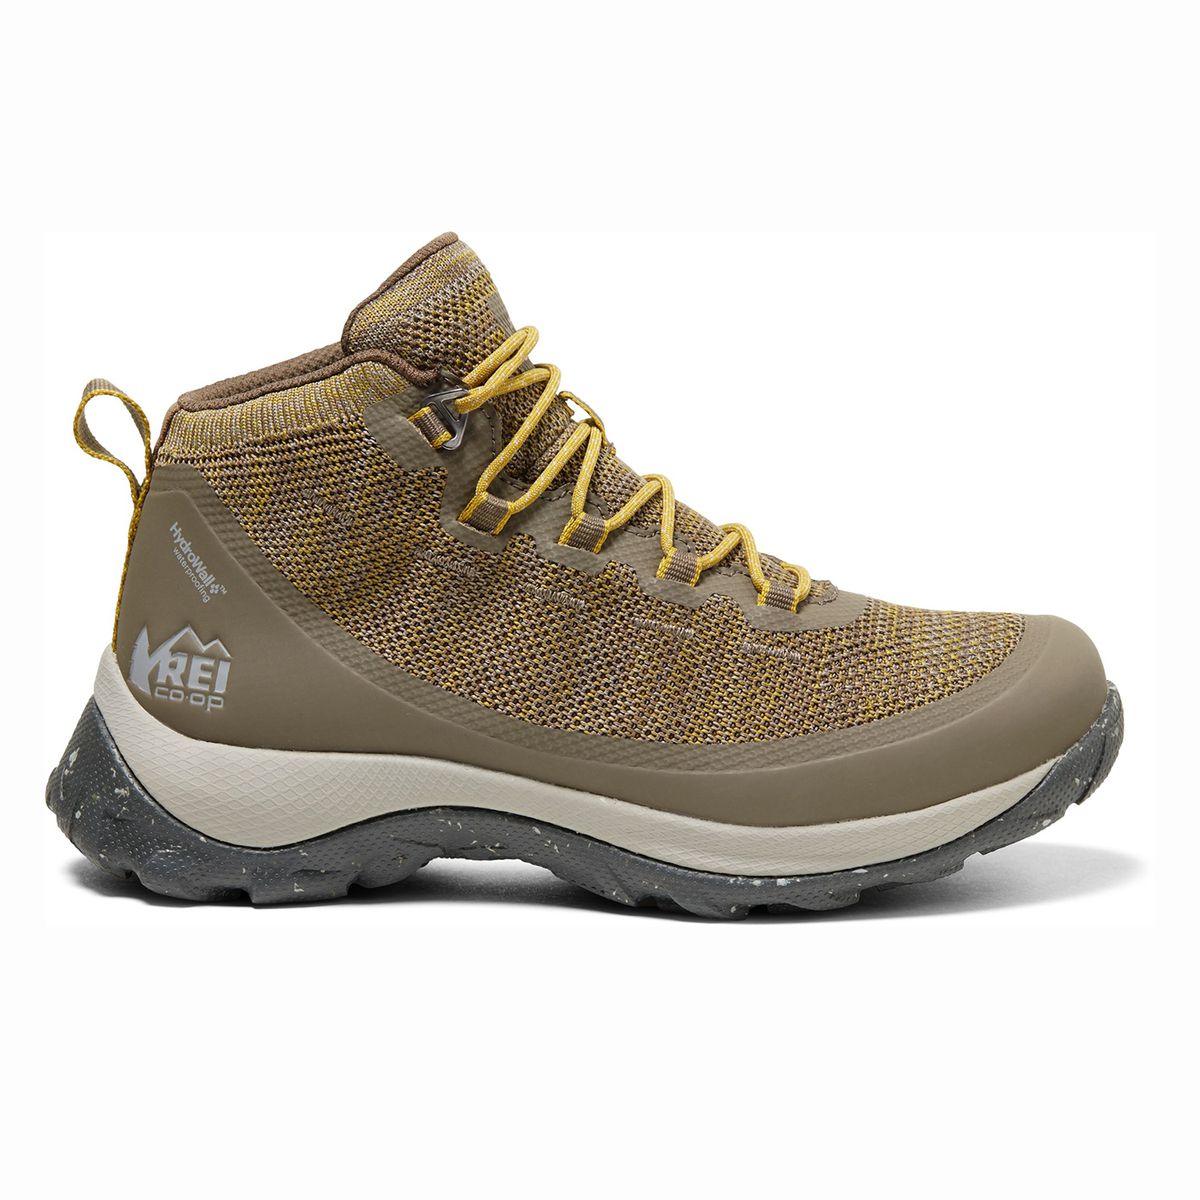 REI Co-op Flash Hiking Boots - Women's